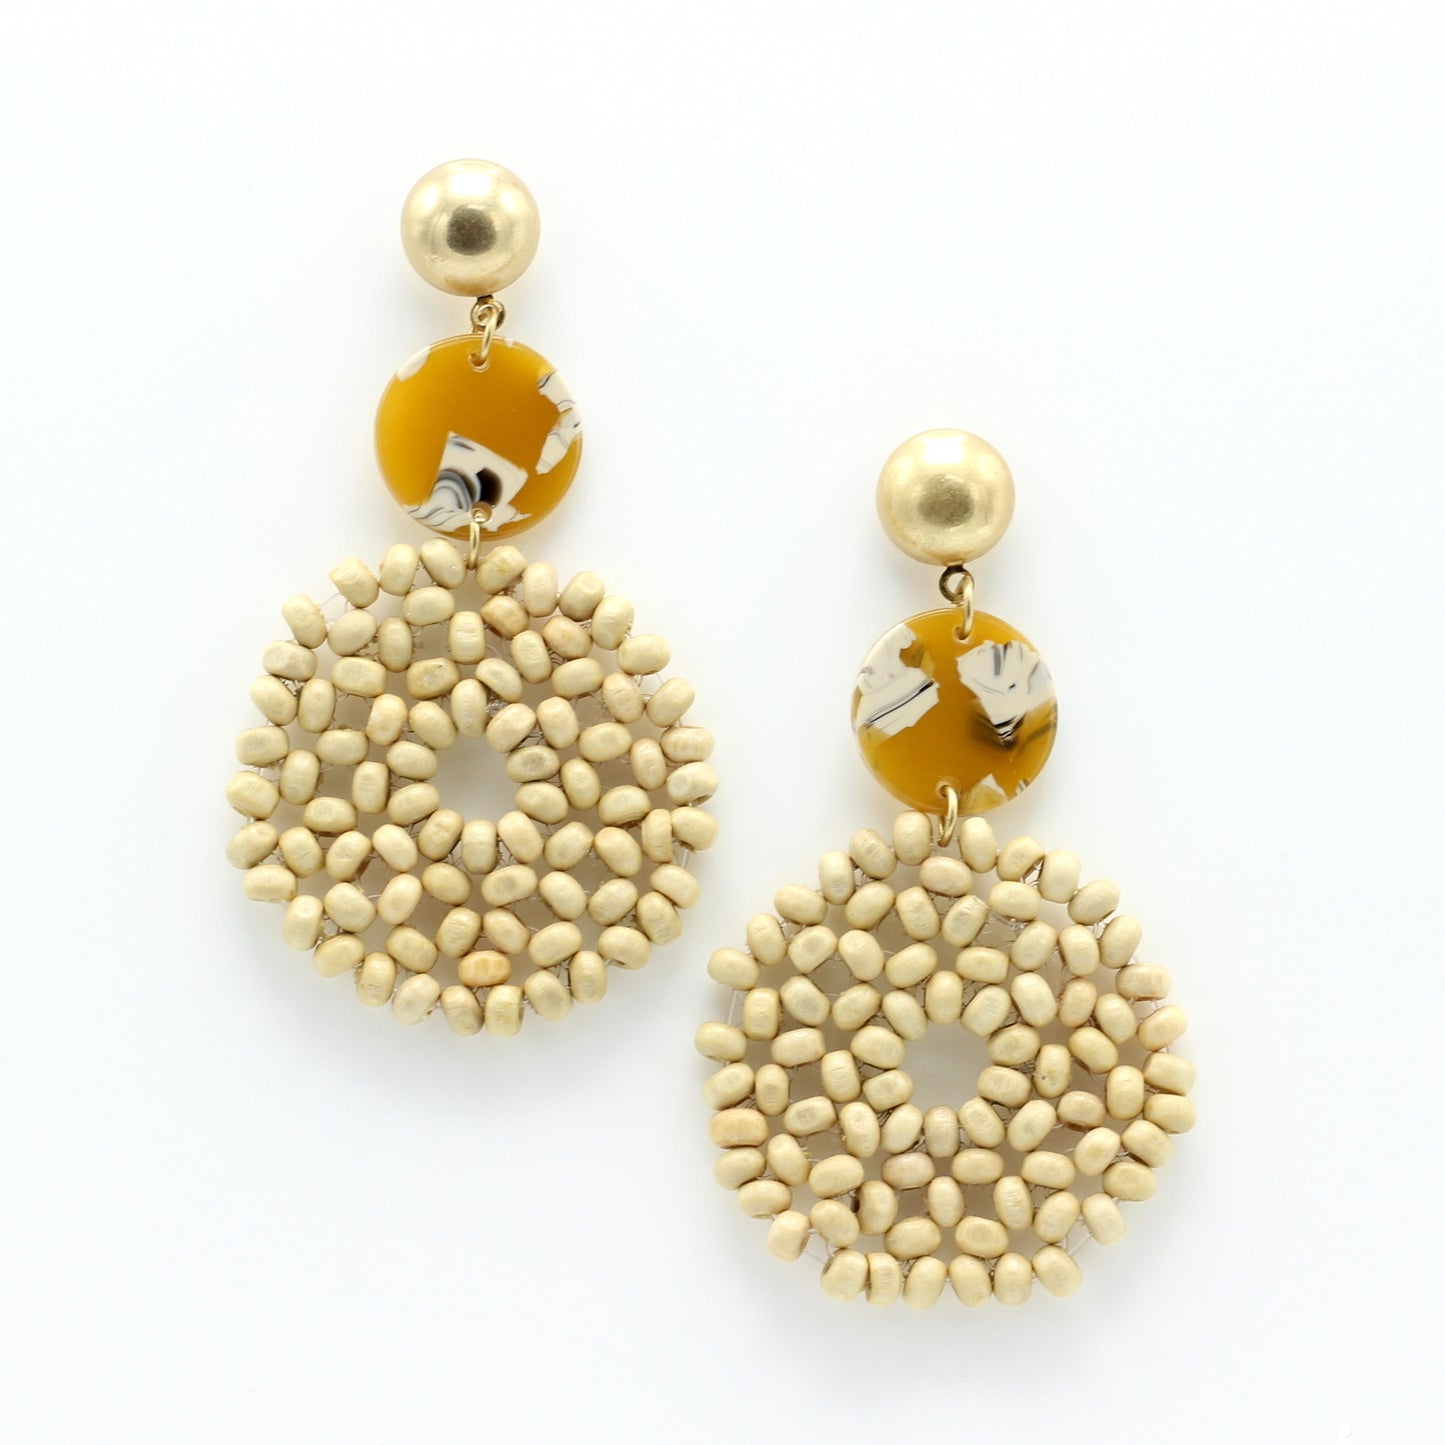 Earrings Handmade Beads and Acrylic - Hashtag Bamboo